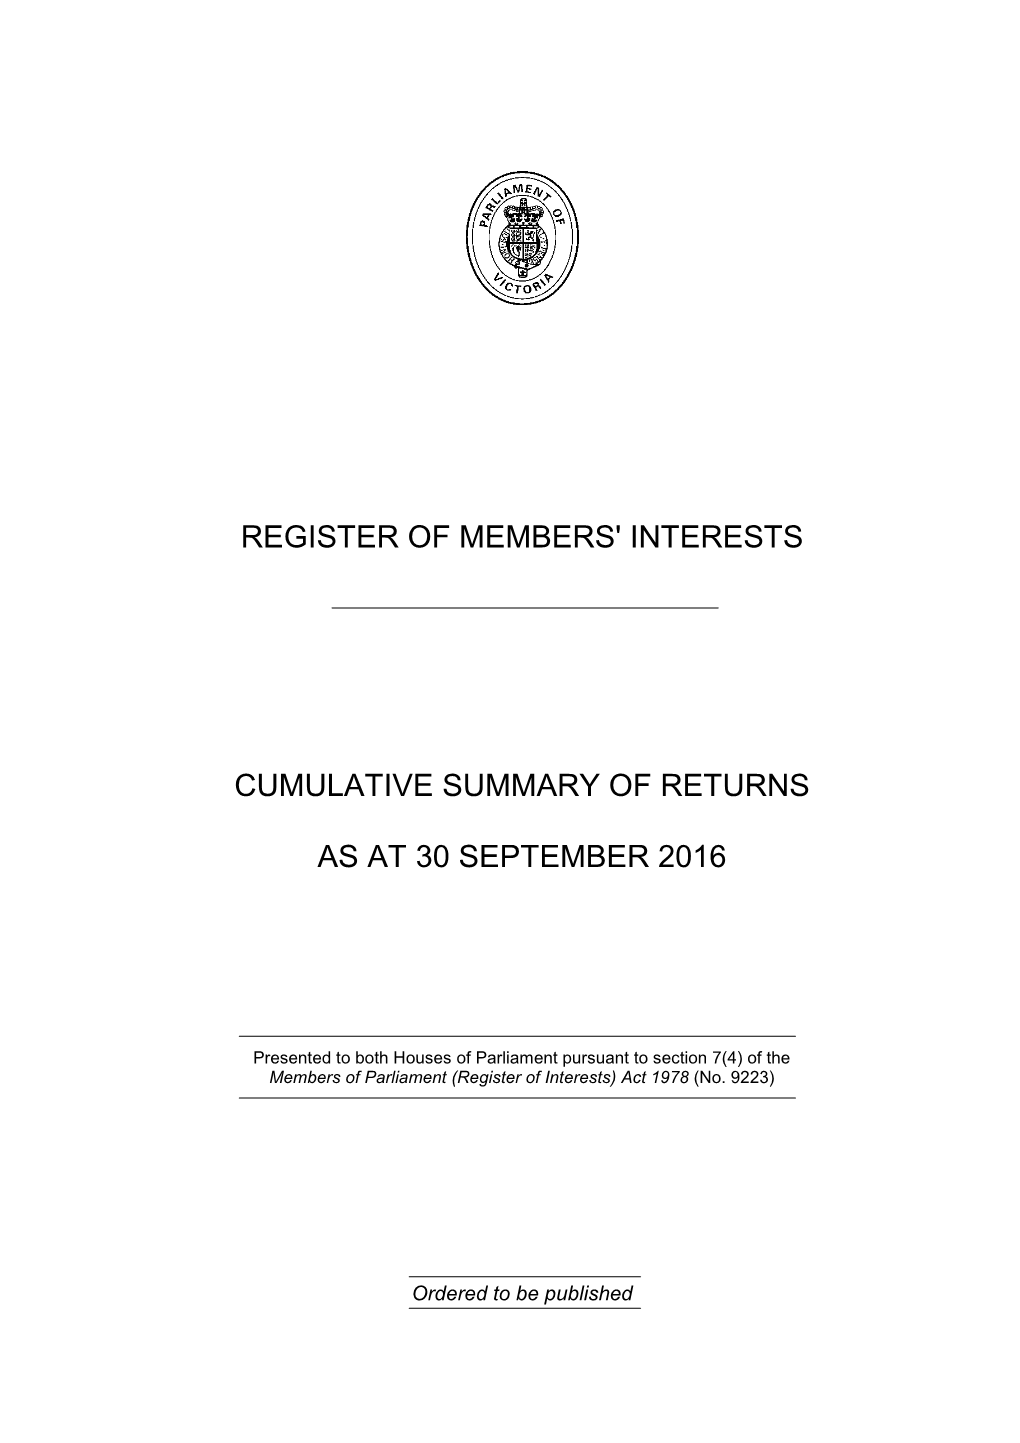 Cumulative Summary of Returns As at 30 September 2016